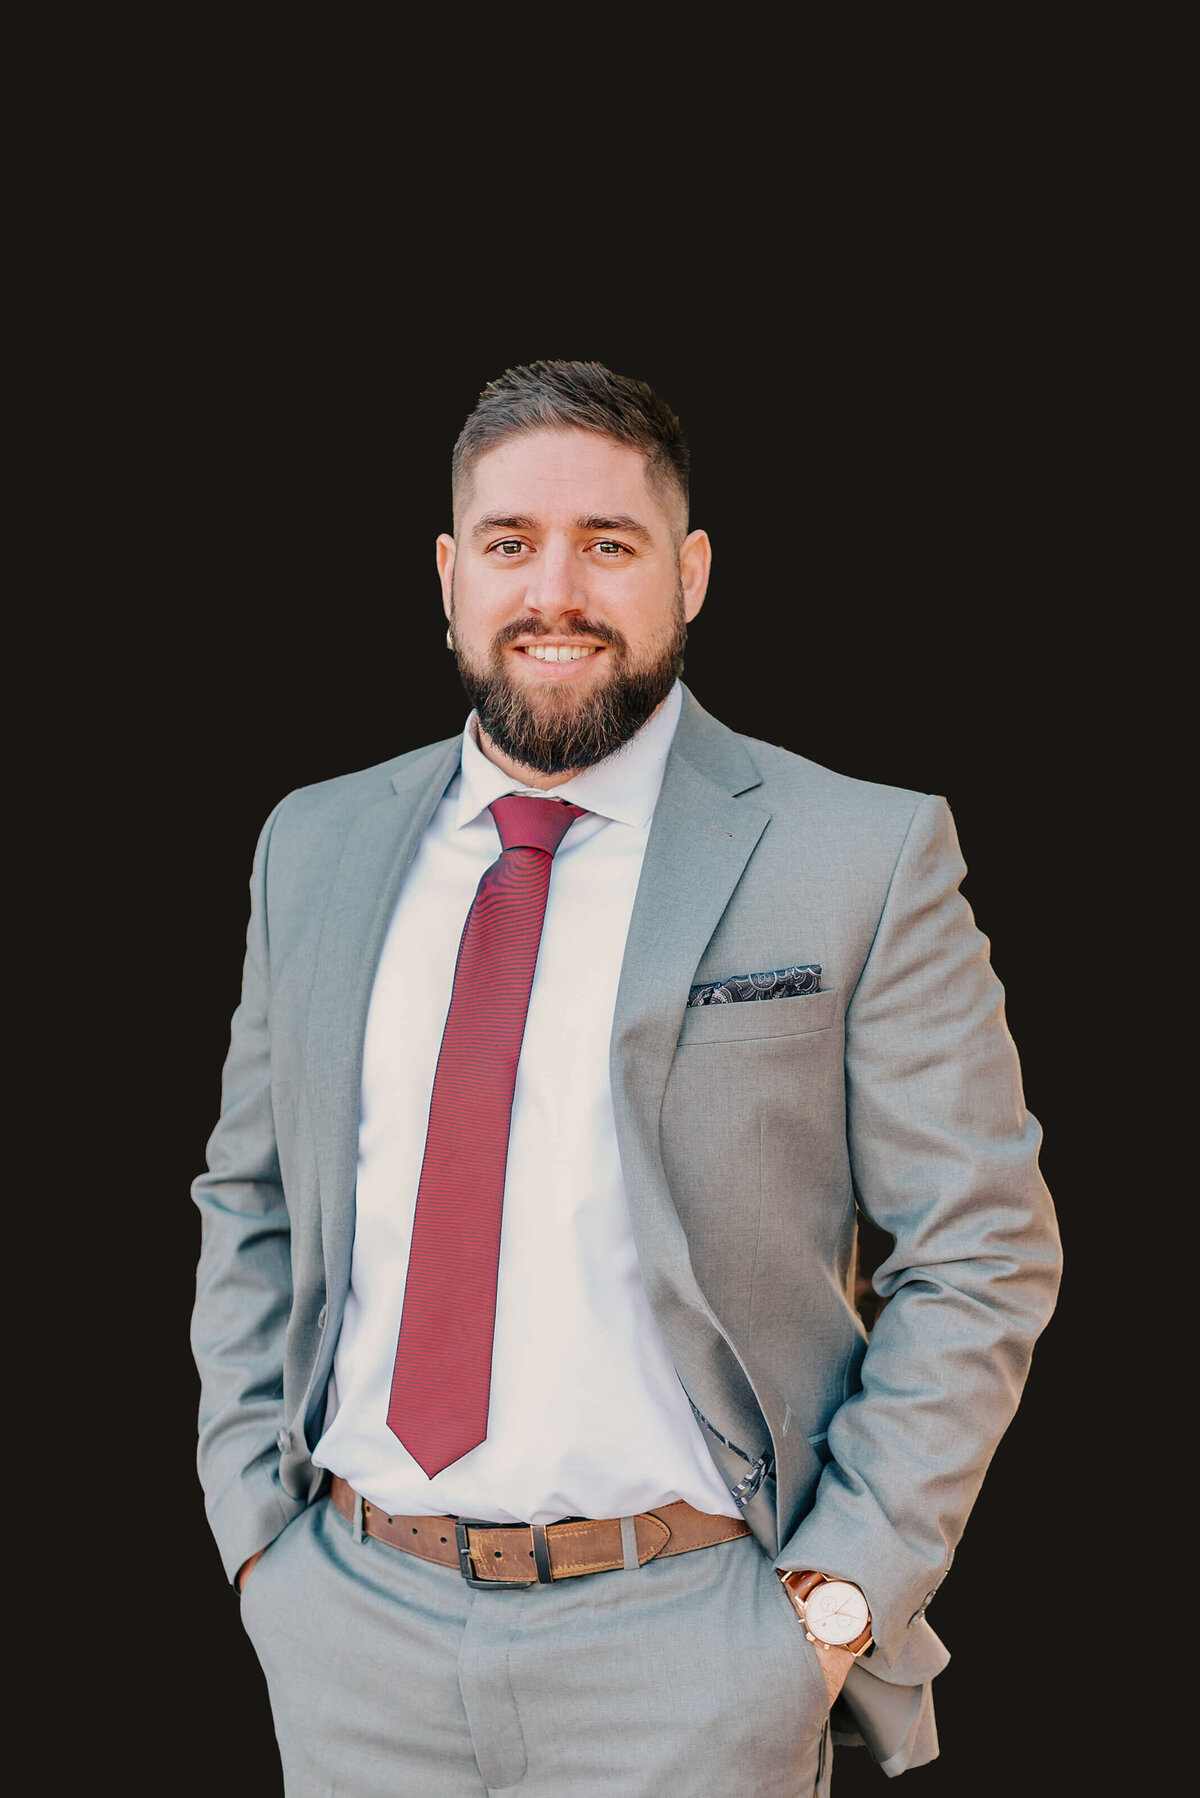 Springfield MO branding photographer captures man in grey suit smiling